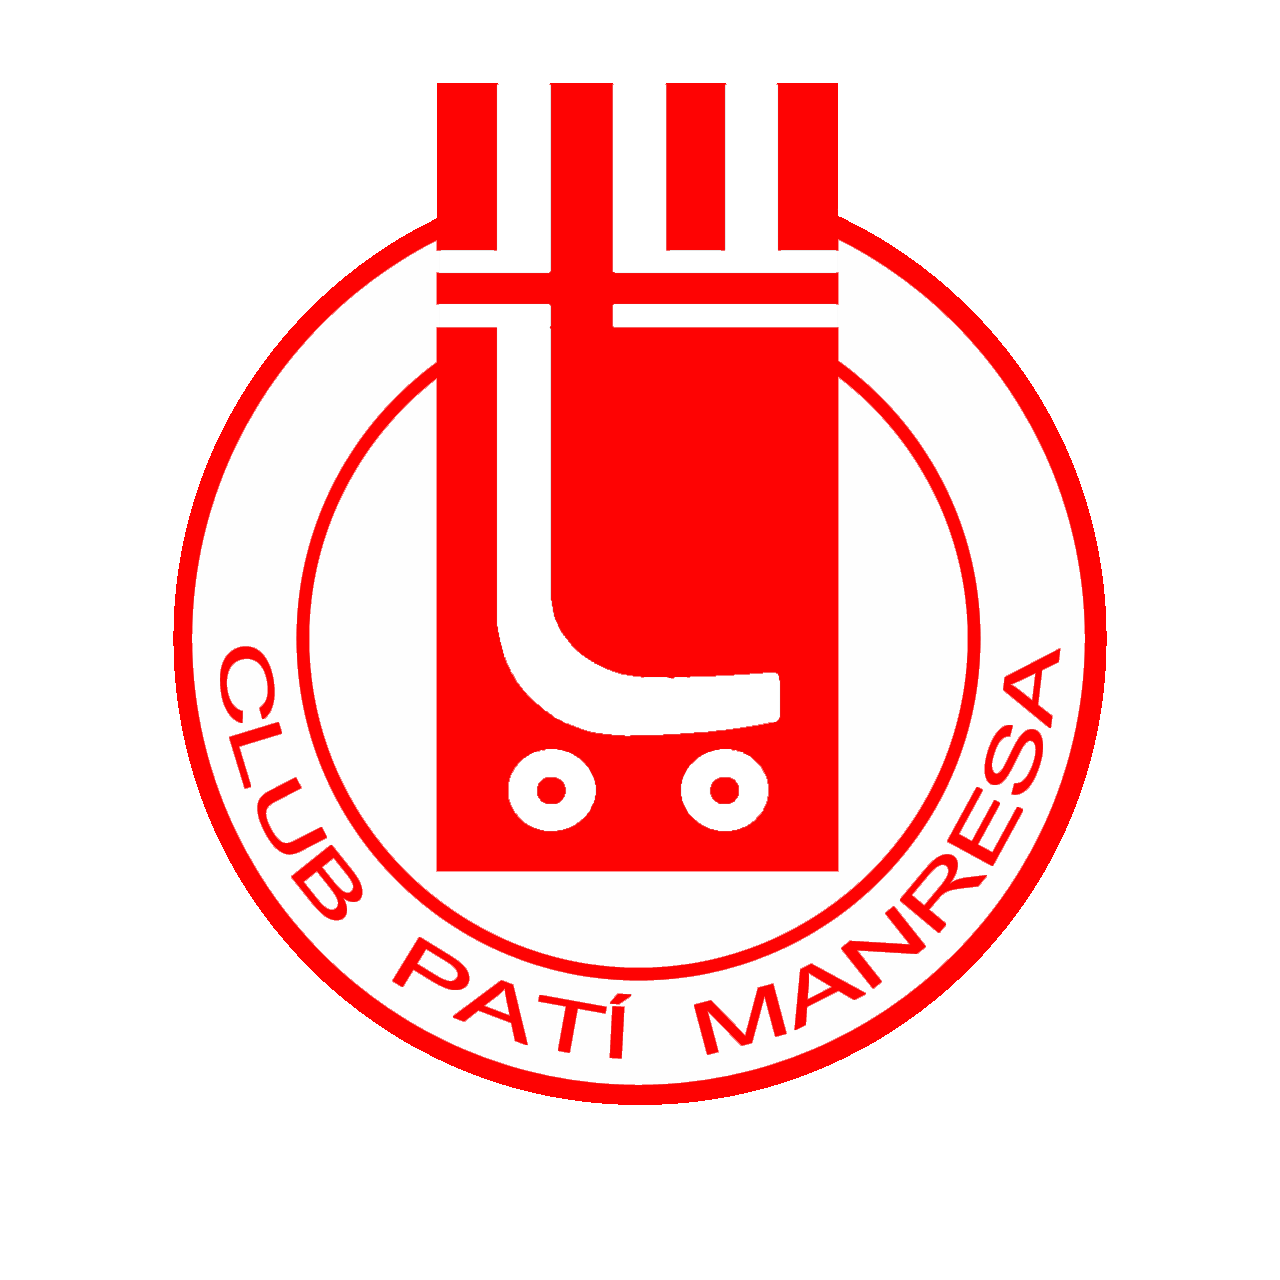 Club Patí Manresa